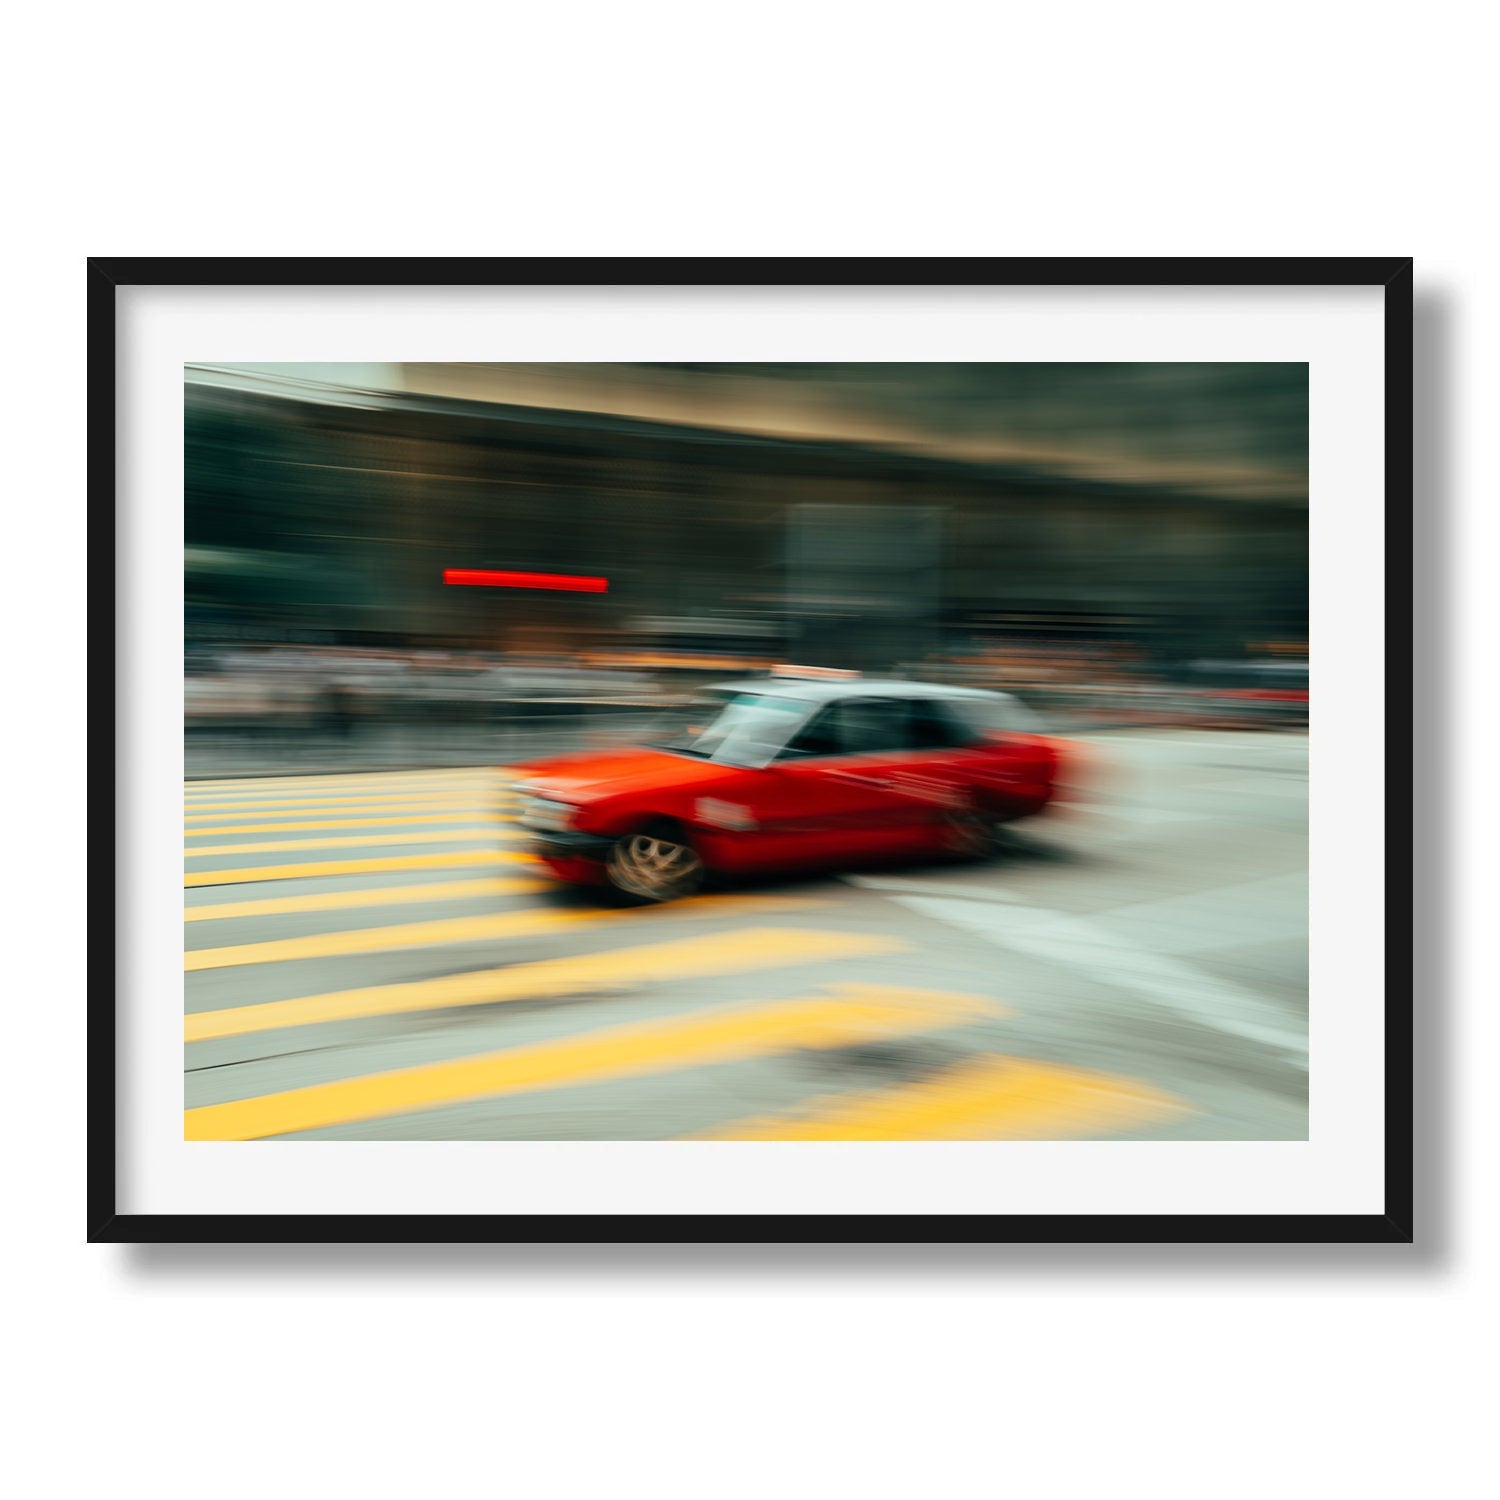 Hong Kong Red Taxi - Peter Yan Studio